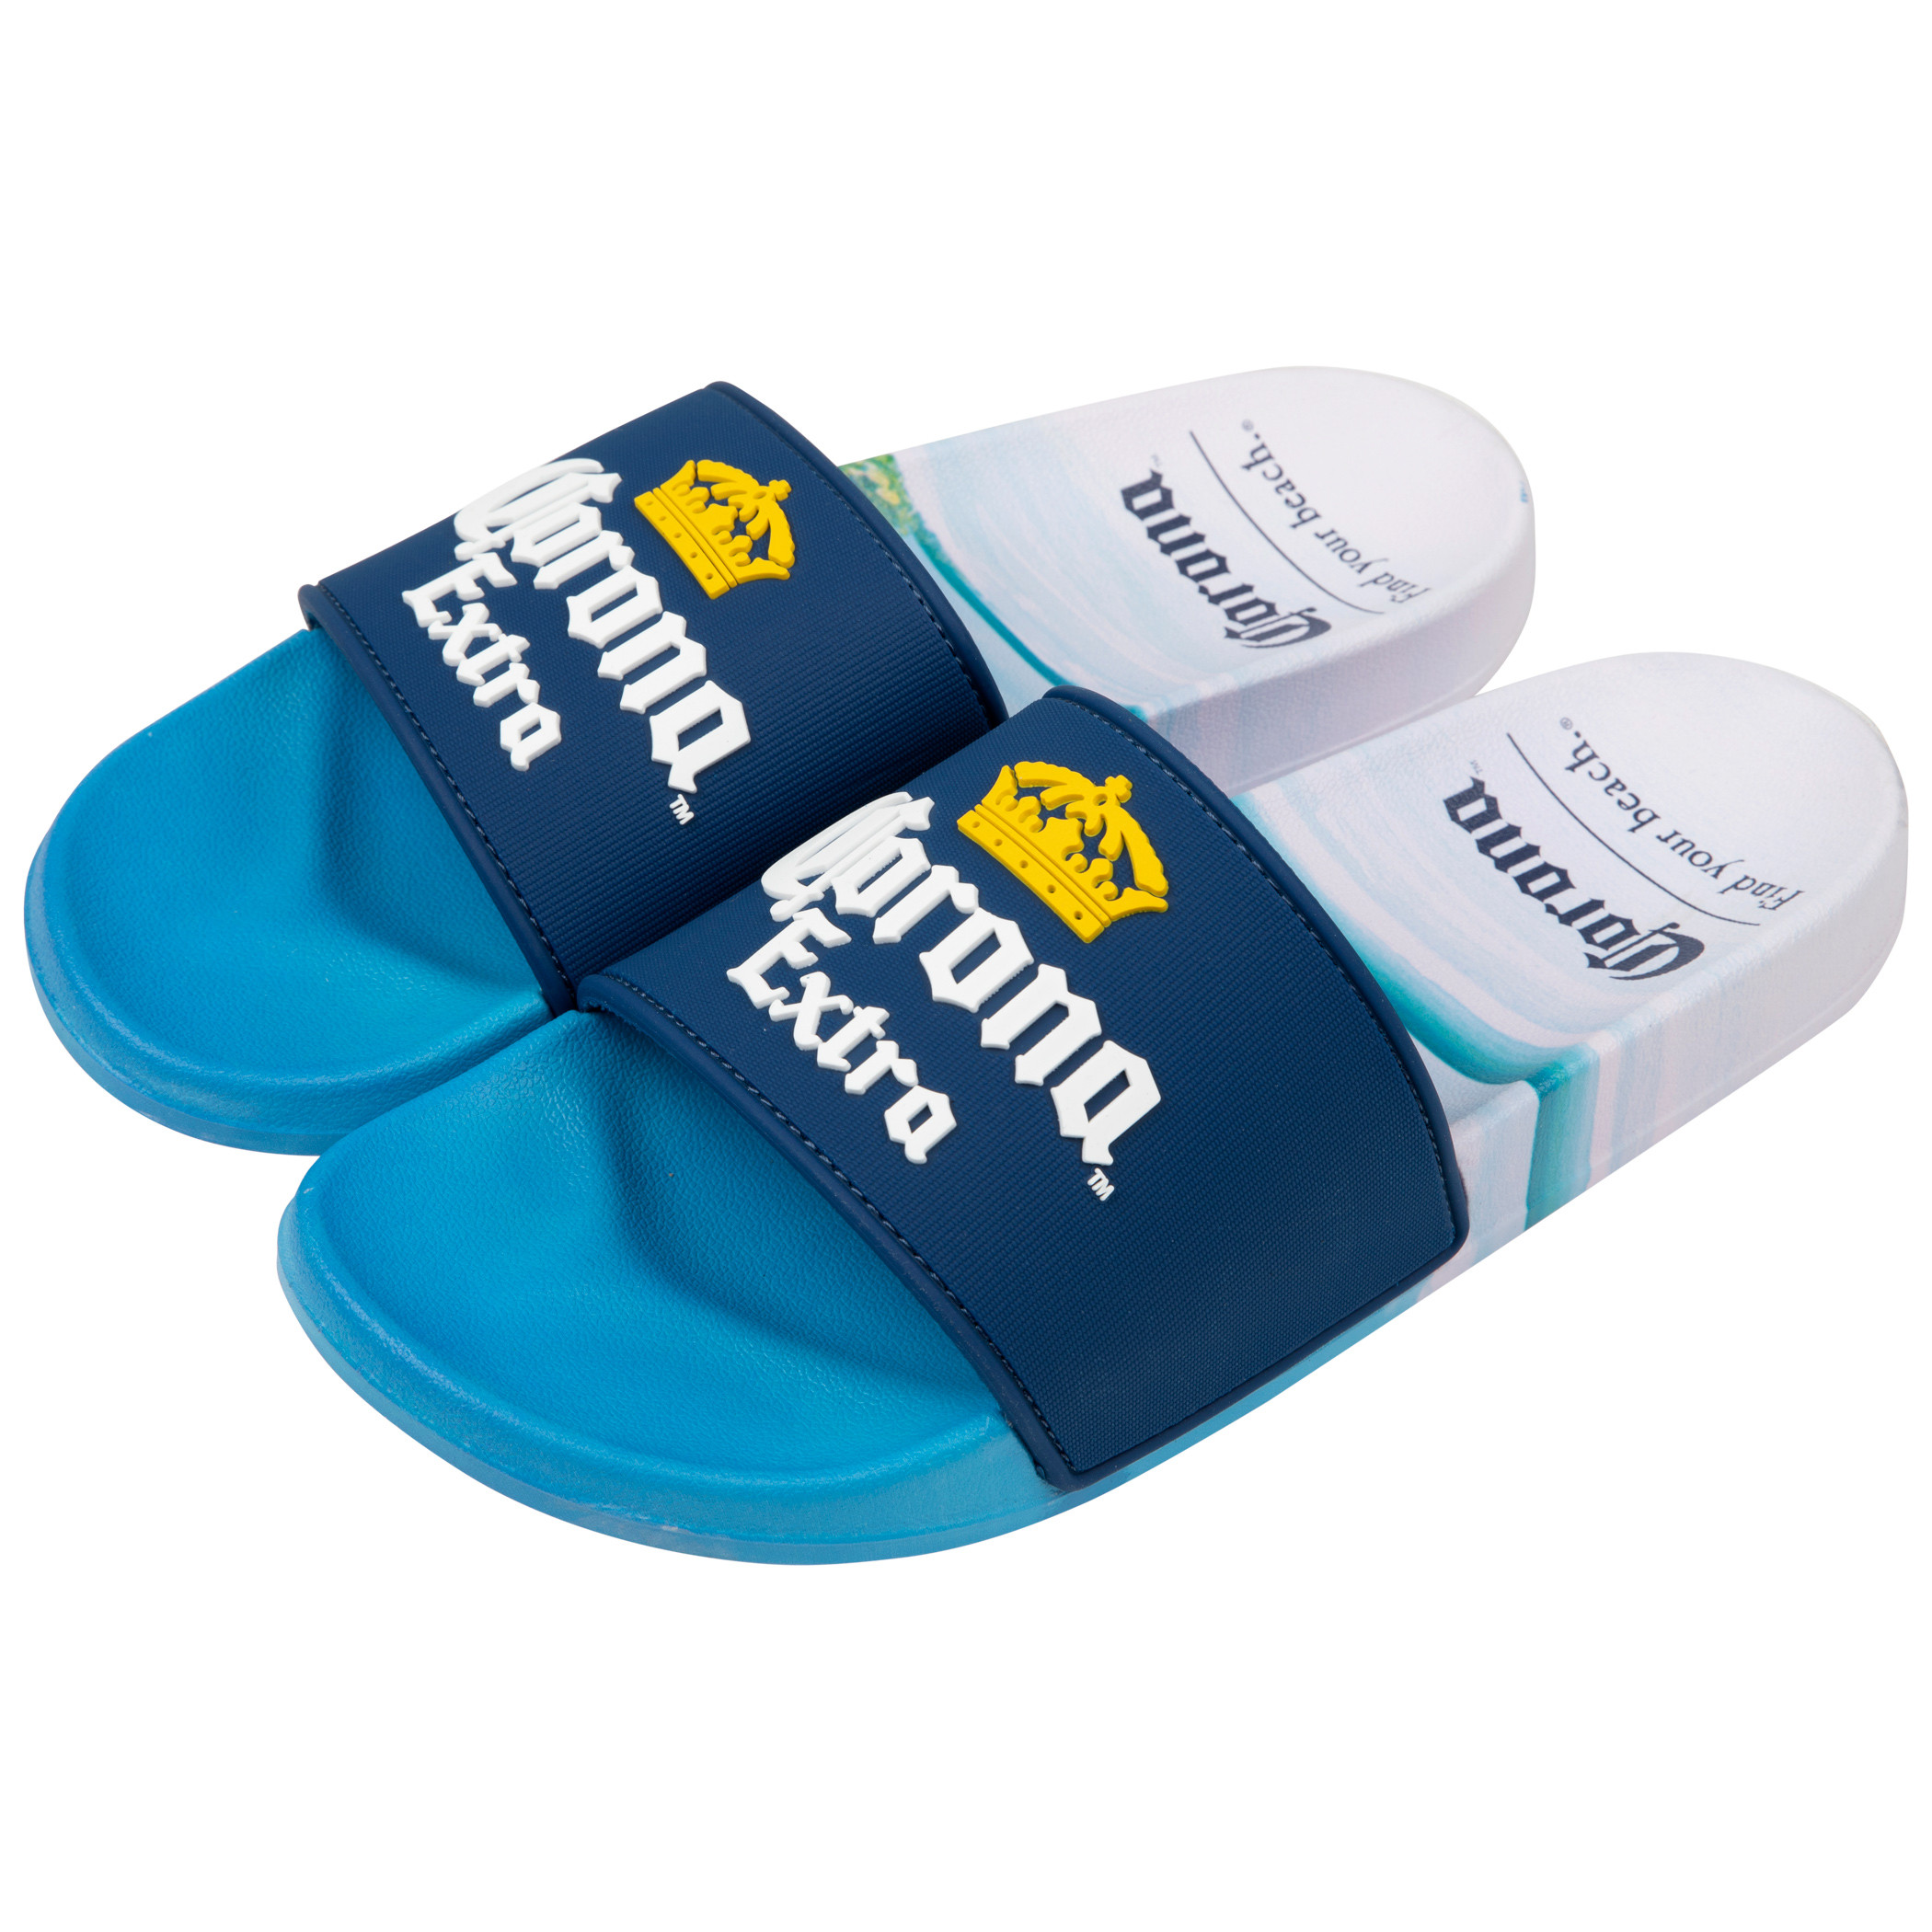 Corona Extra Logo Beach Sandal Slides